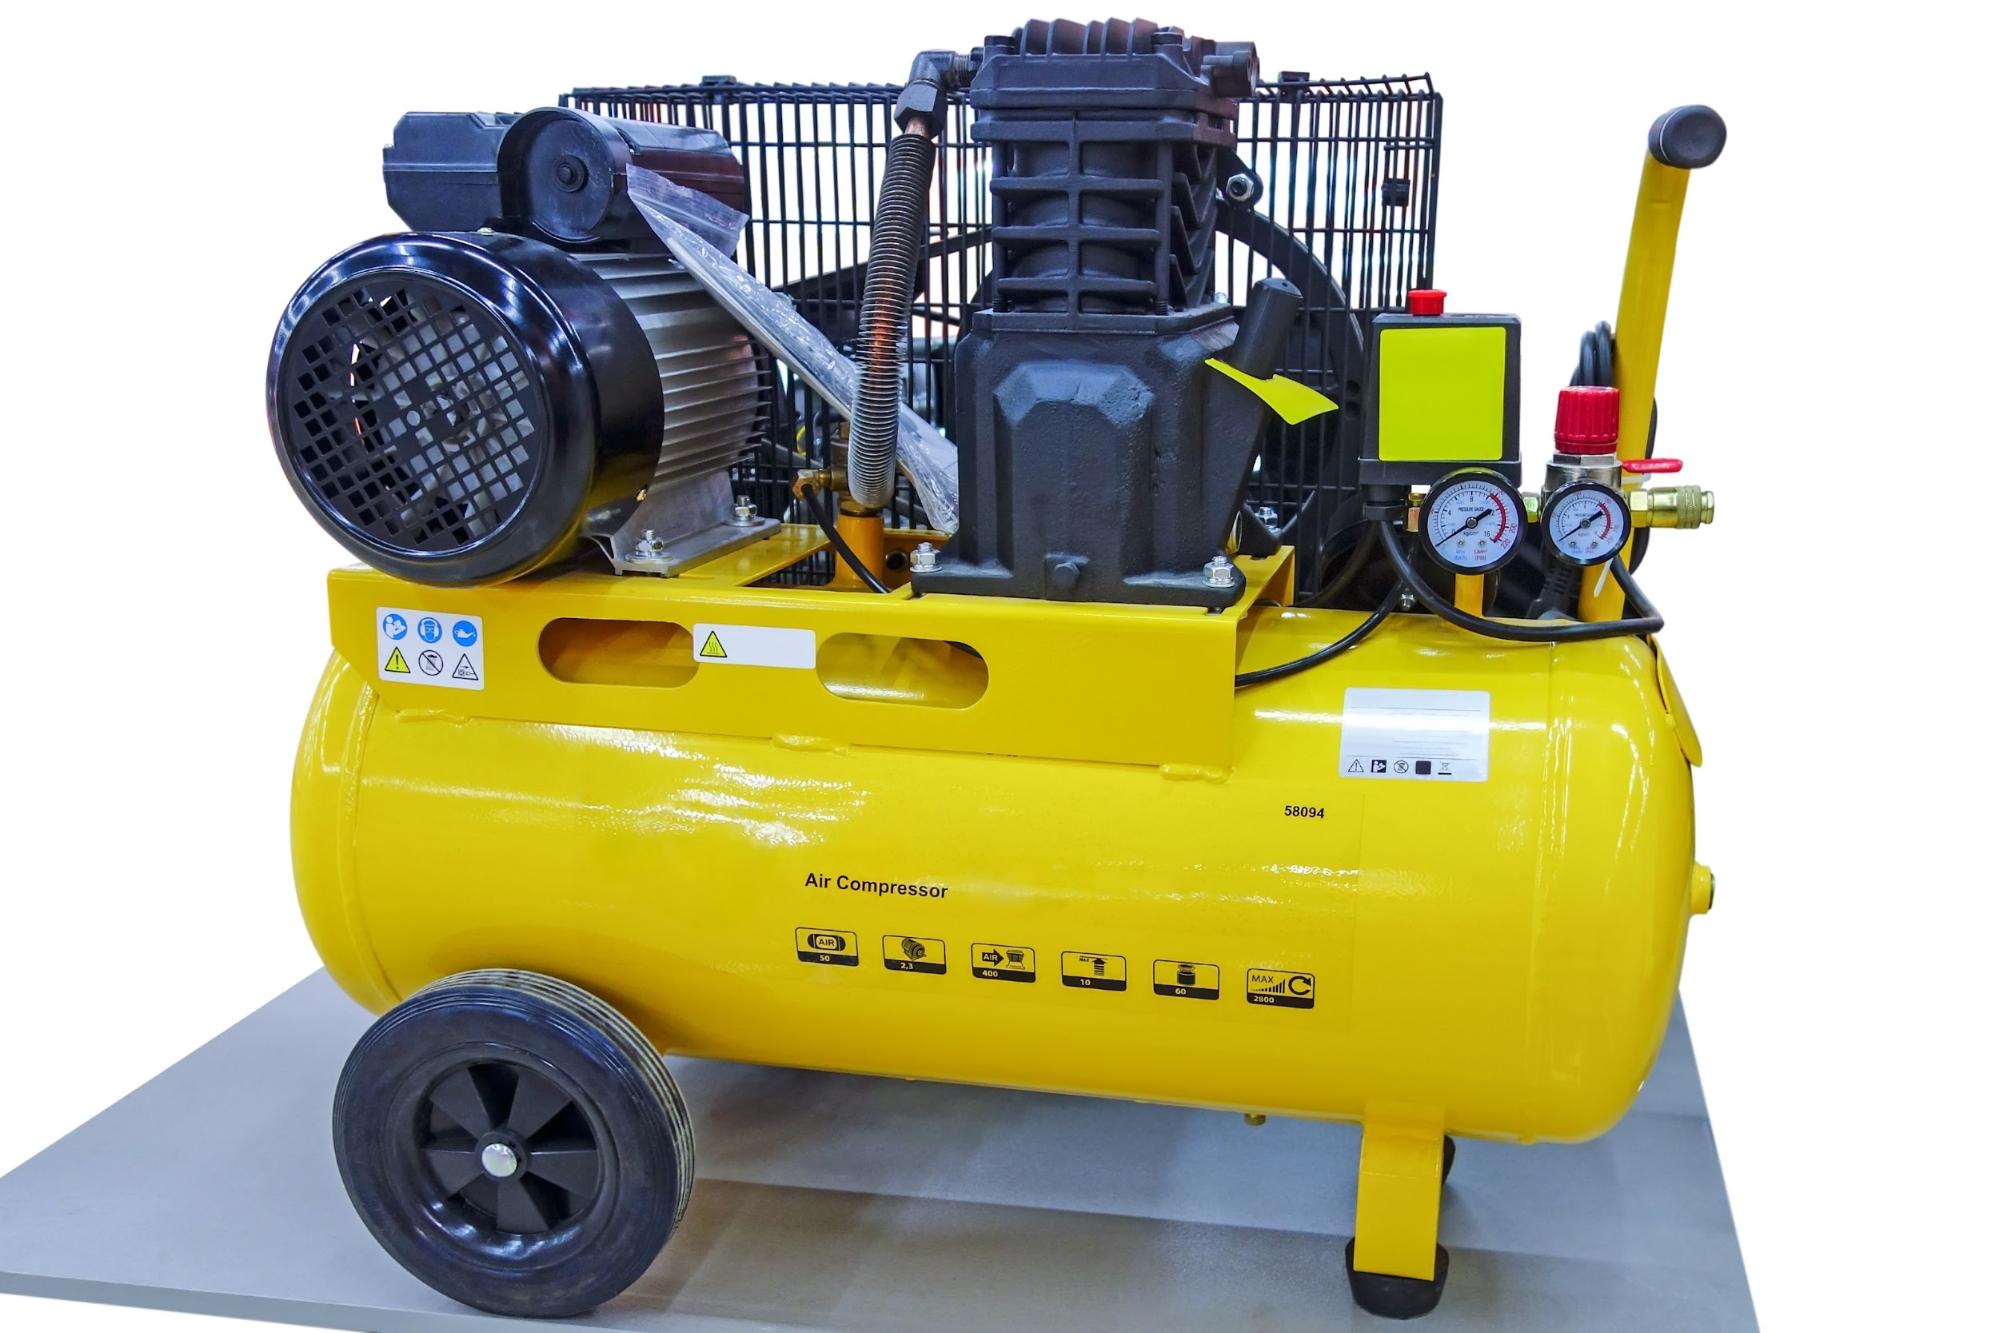 A bright yellow air compressor.